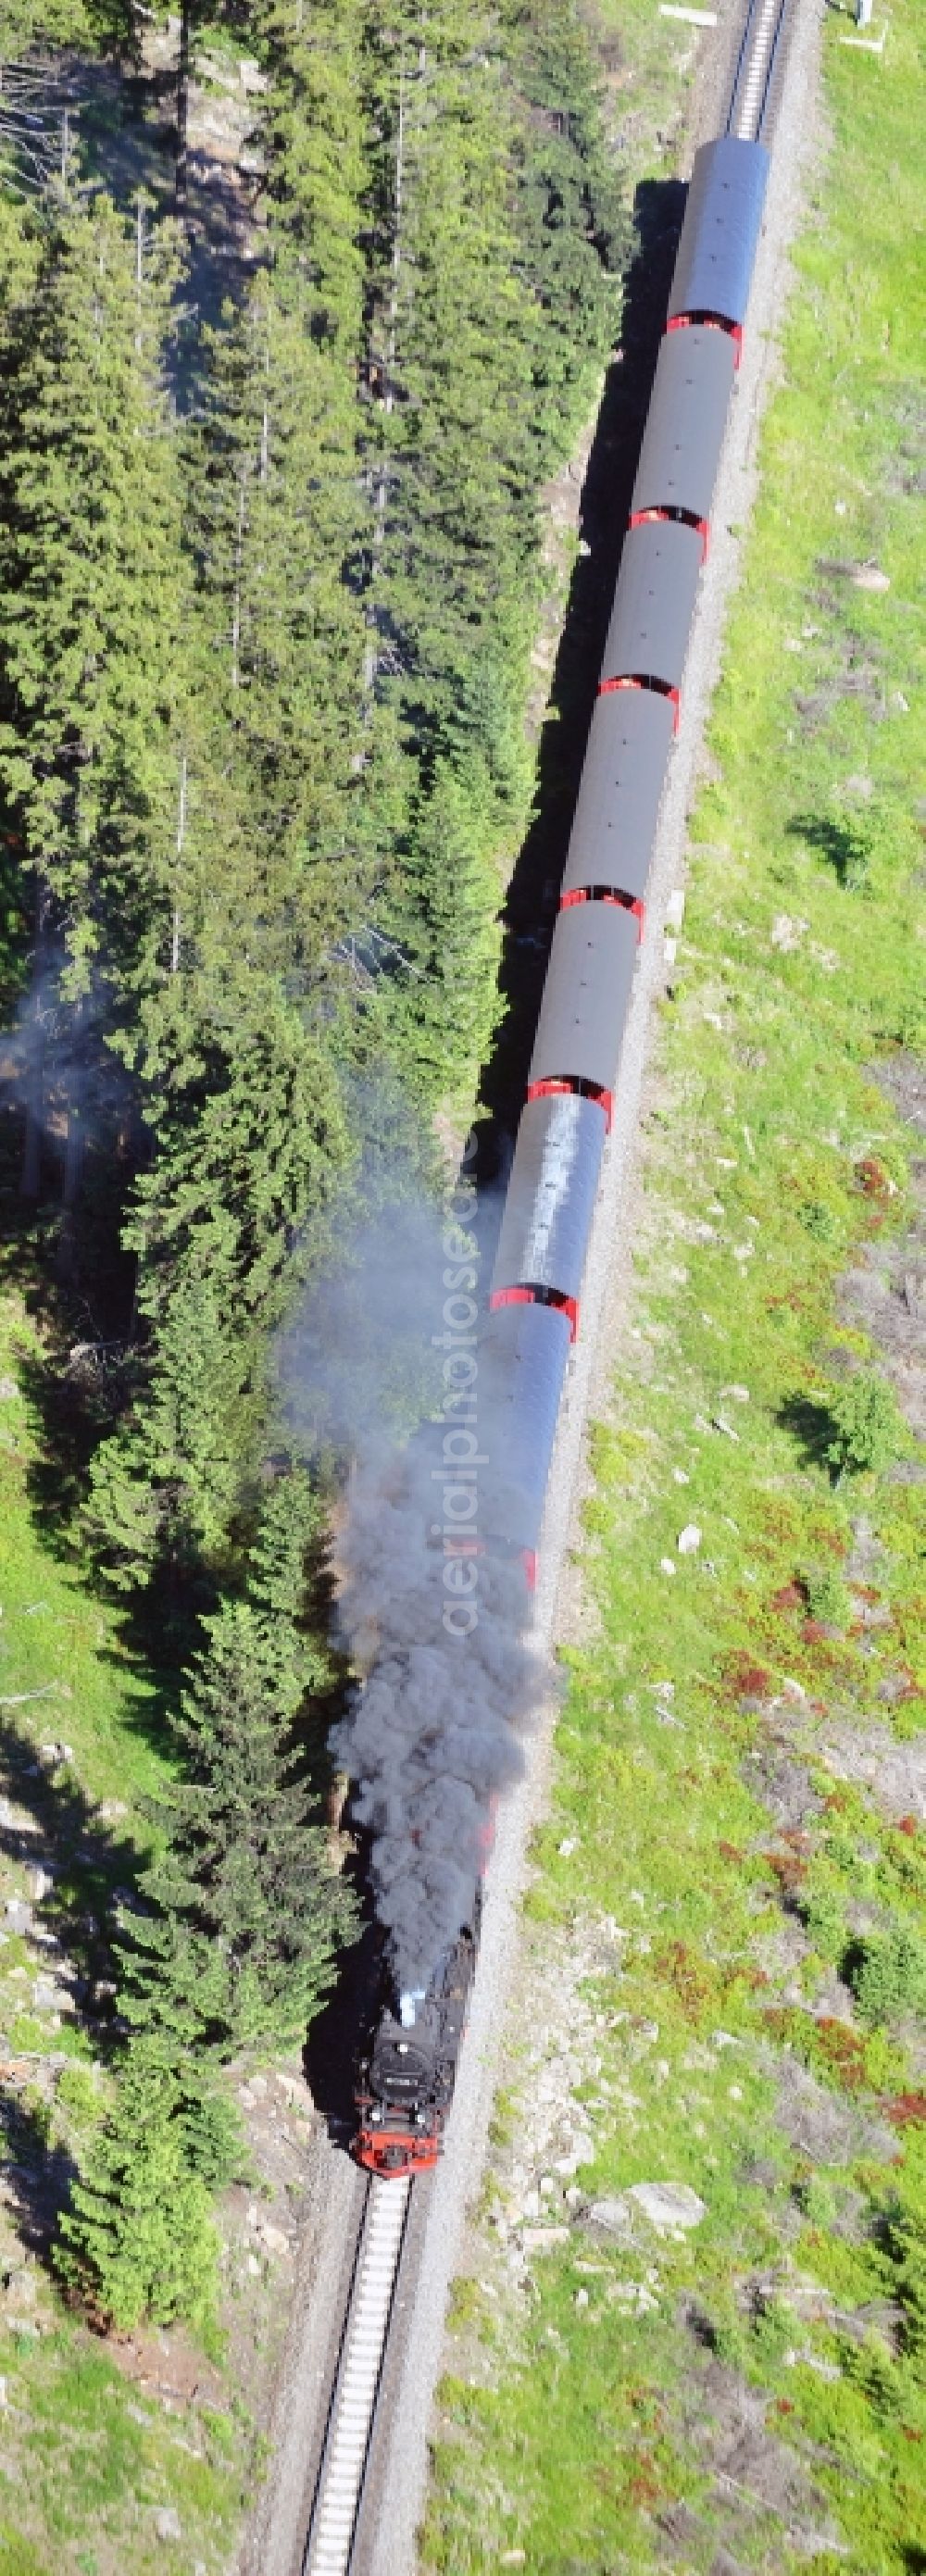 Aerial photograph Brocken - The railway Brockenbahn with a Mallet-Engine / steam locomotive / railcar, a narrow-gauge railway, during a trip at the Brocken mountain in Saxony-Anhalt